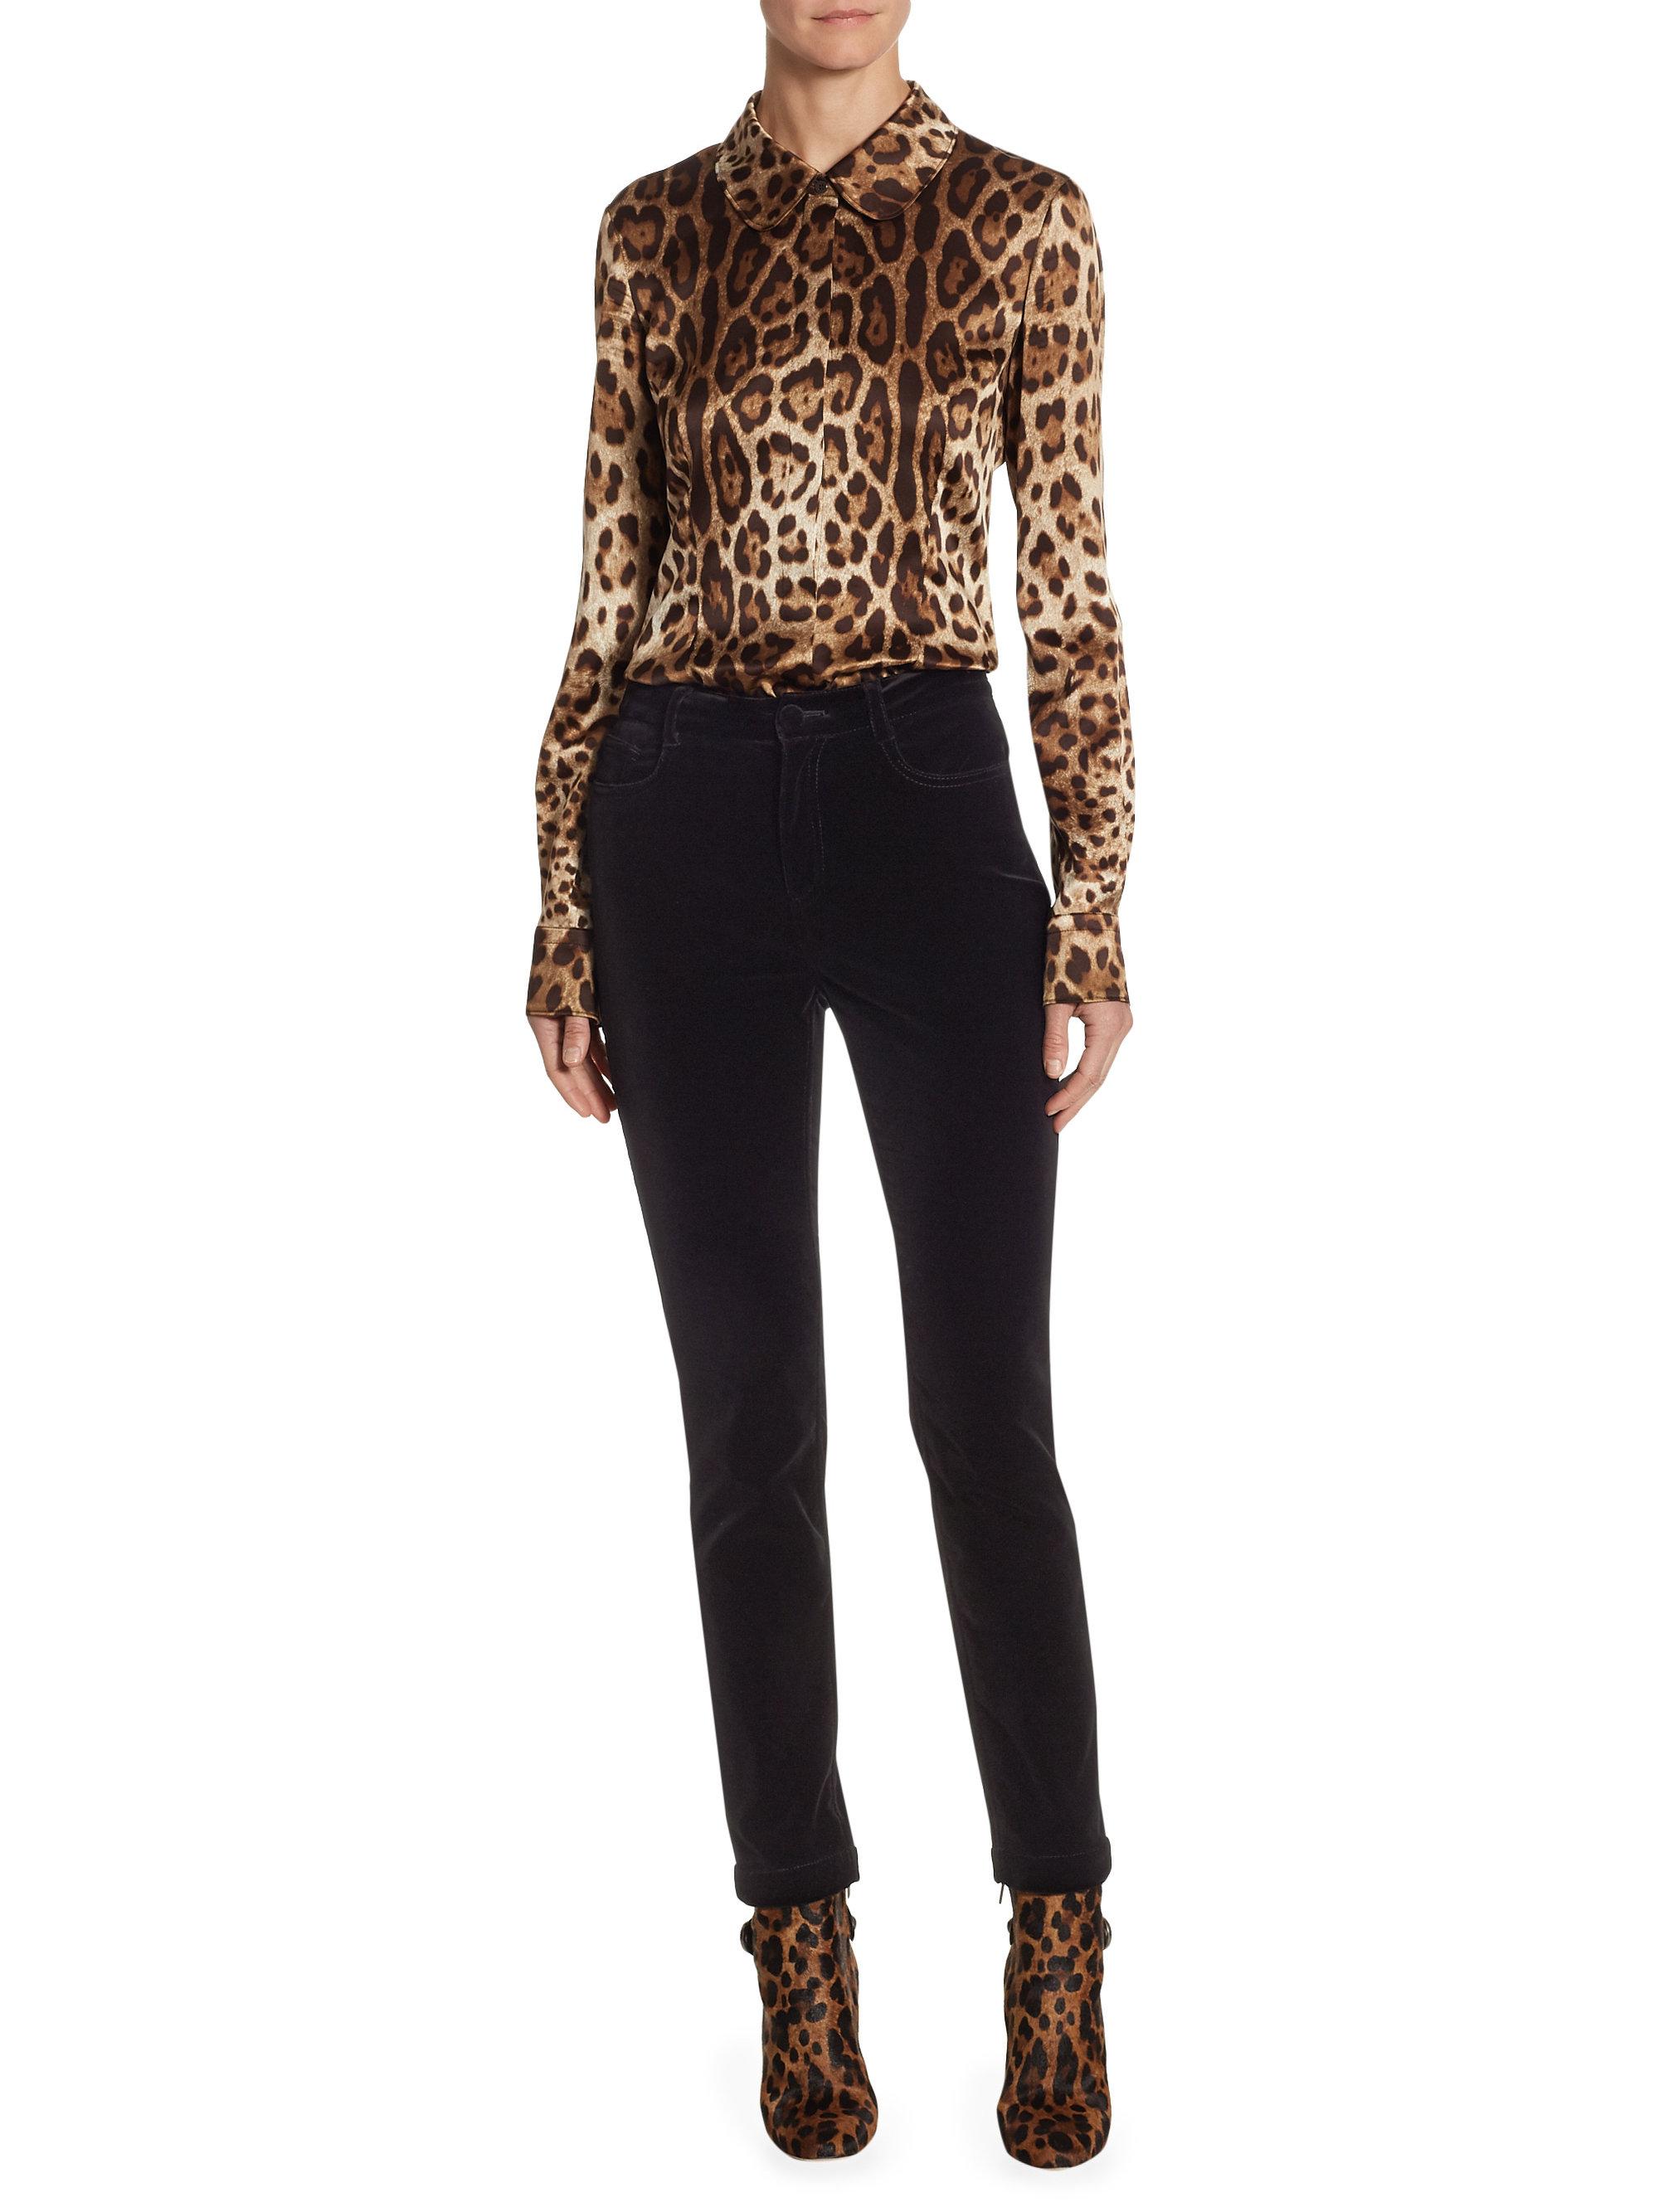 Dolce & Gabbana Leopard Print Blouse - Lyst